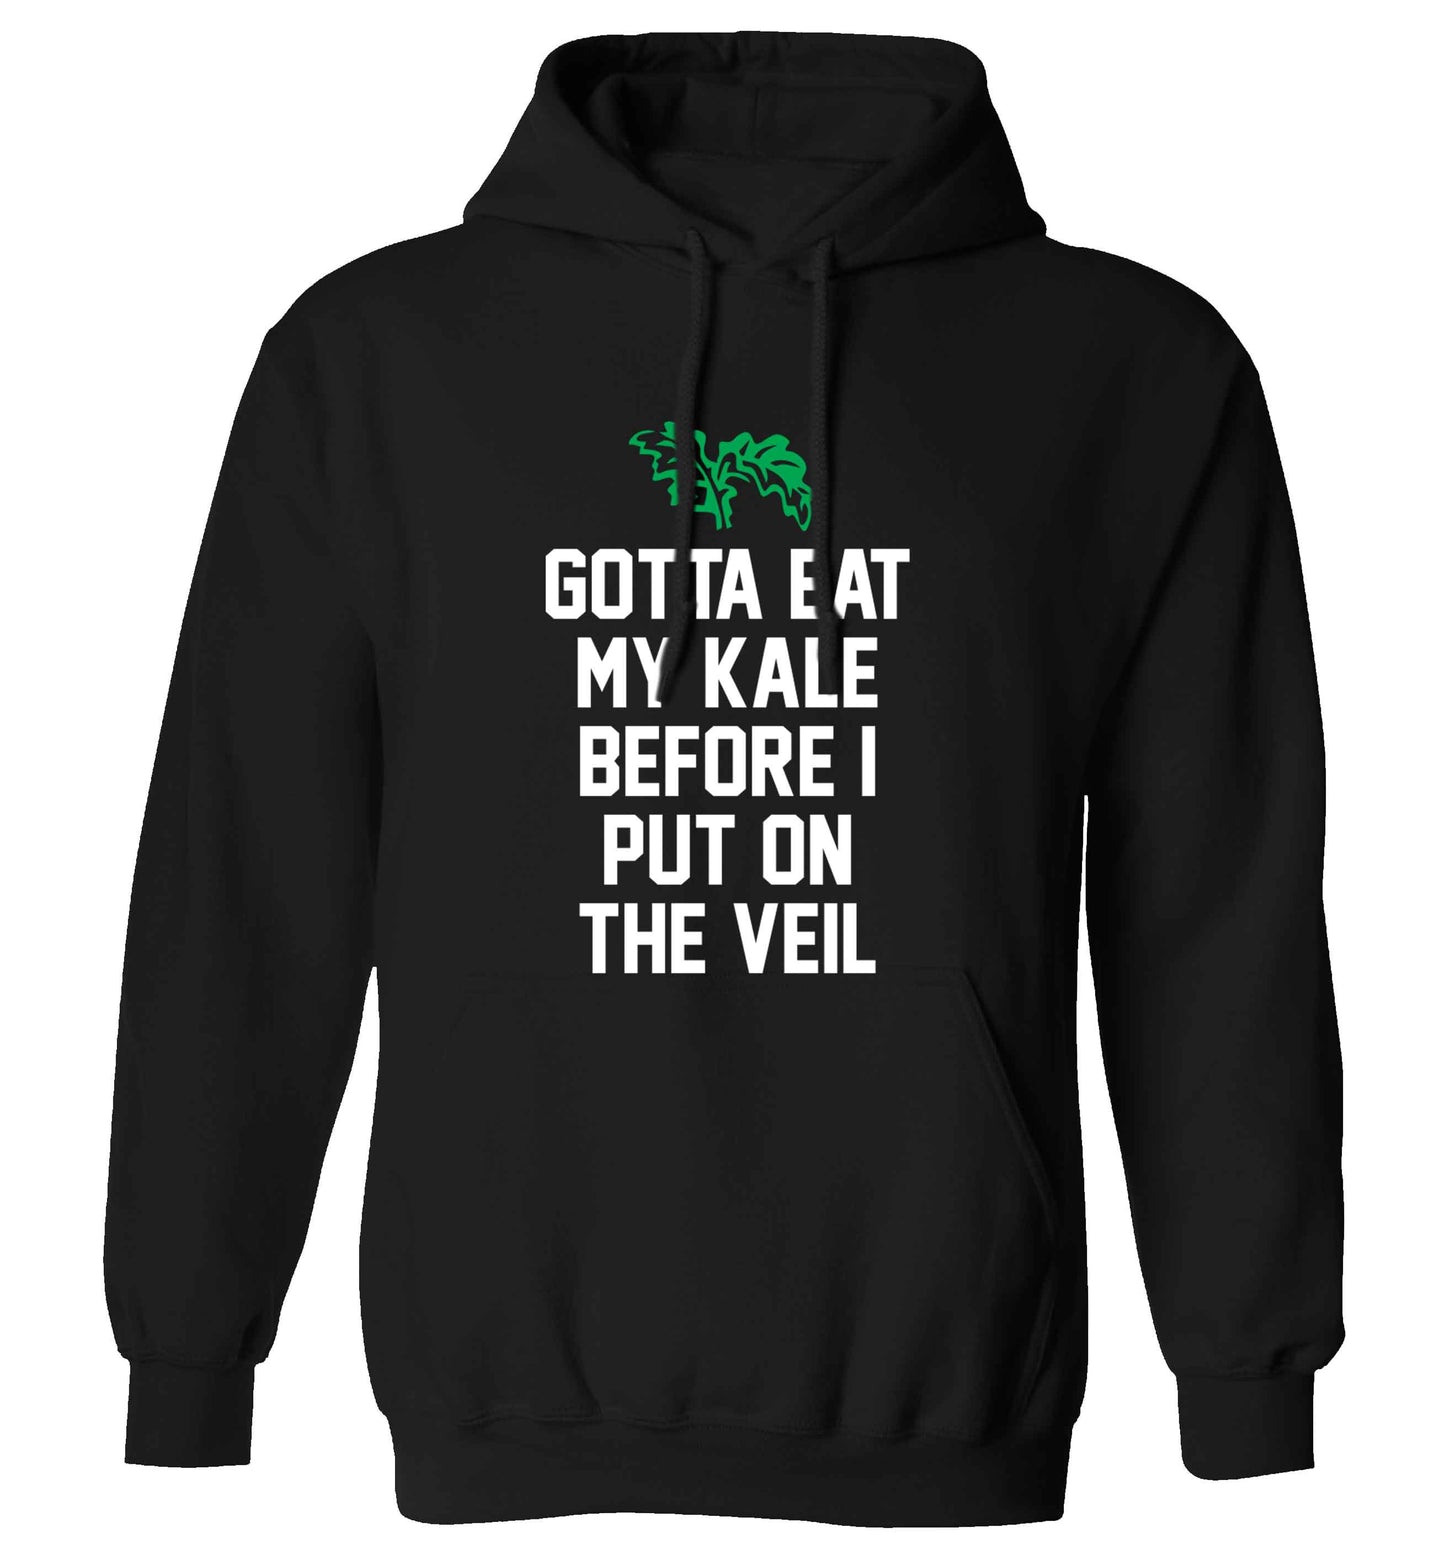 Gotta eat my kale before I put on the veil adults unisex black hoodie 2XL